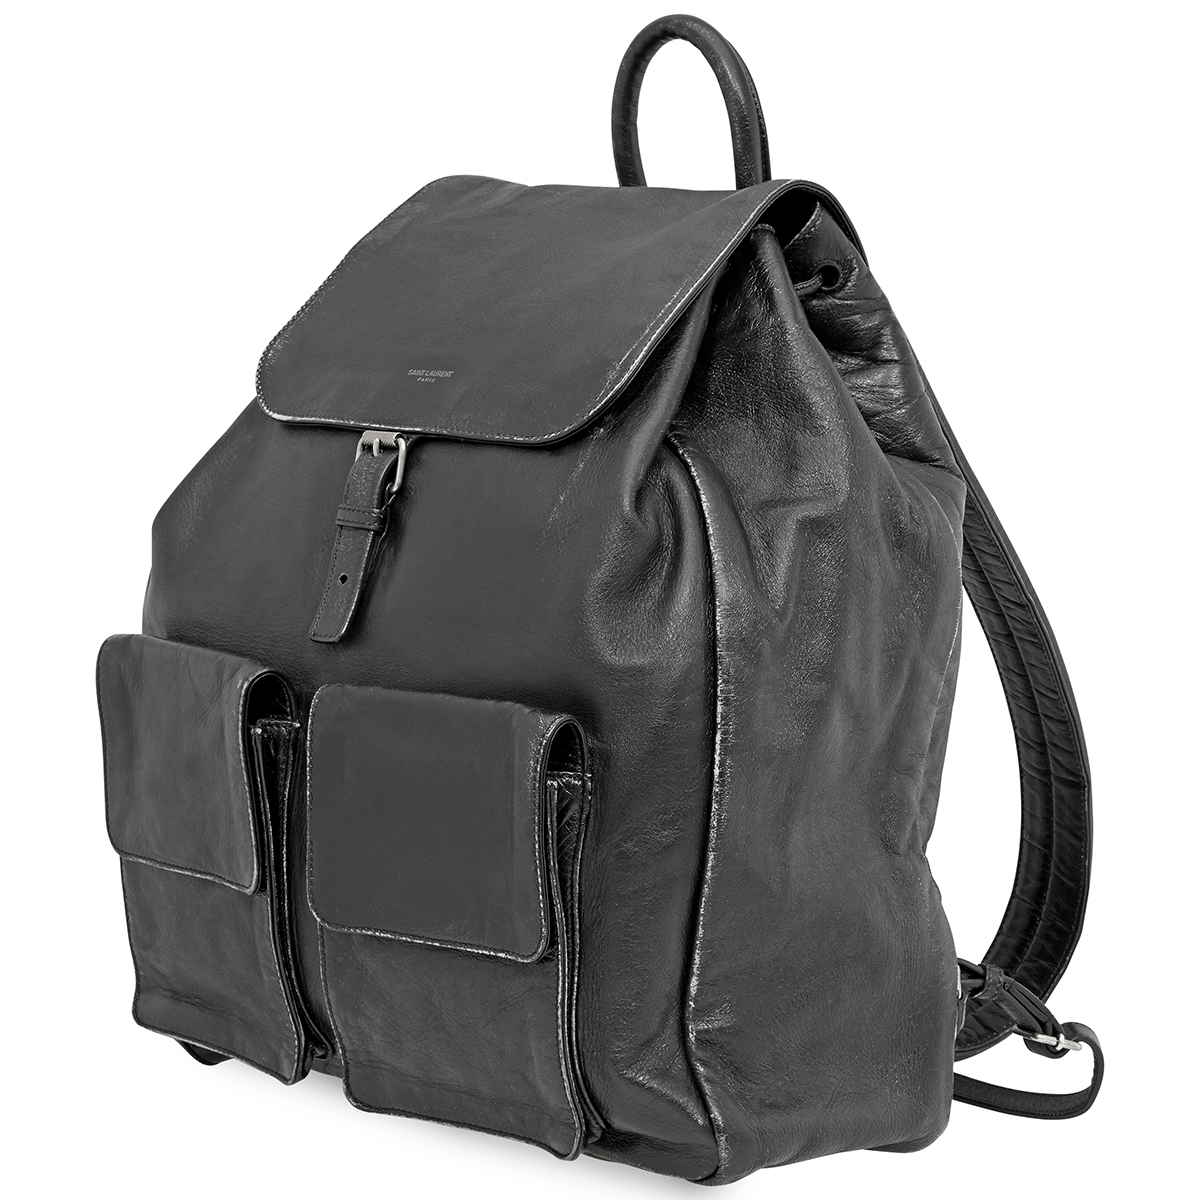 Saint Laurent Nino Backpack In Vintage Leather In Black,grey,silver Tone